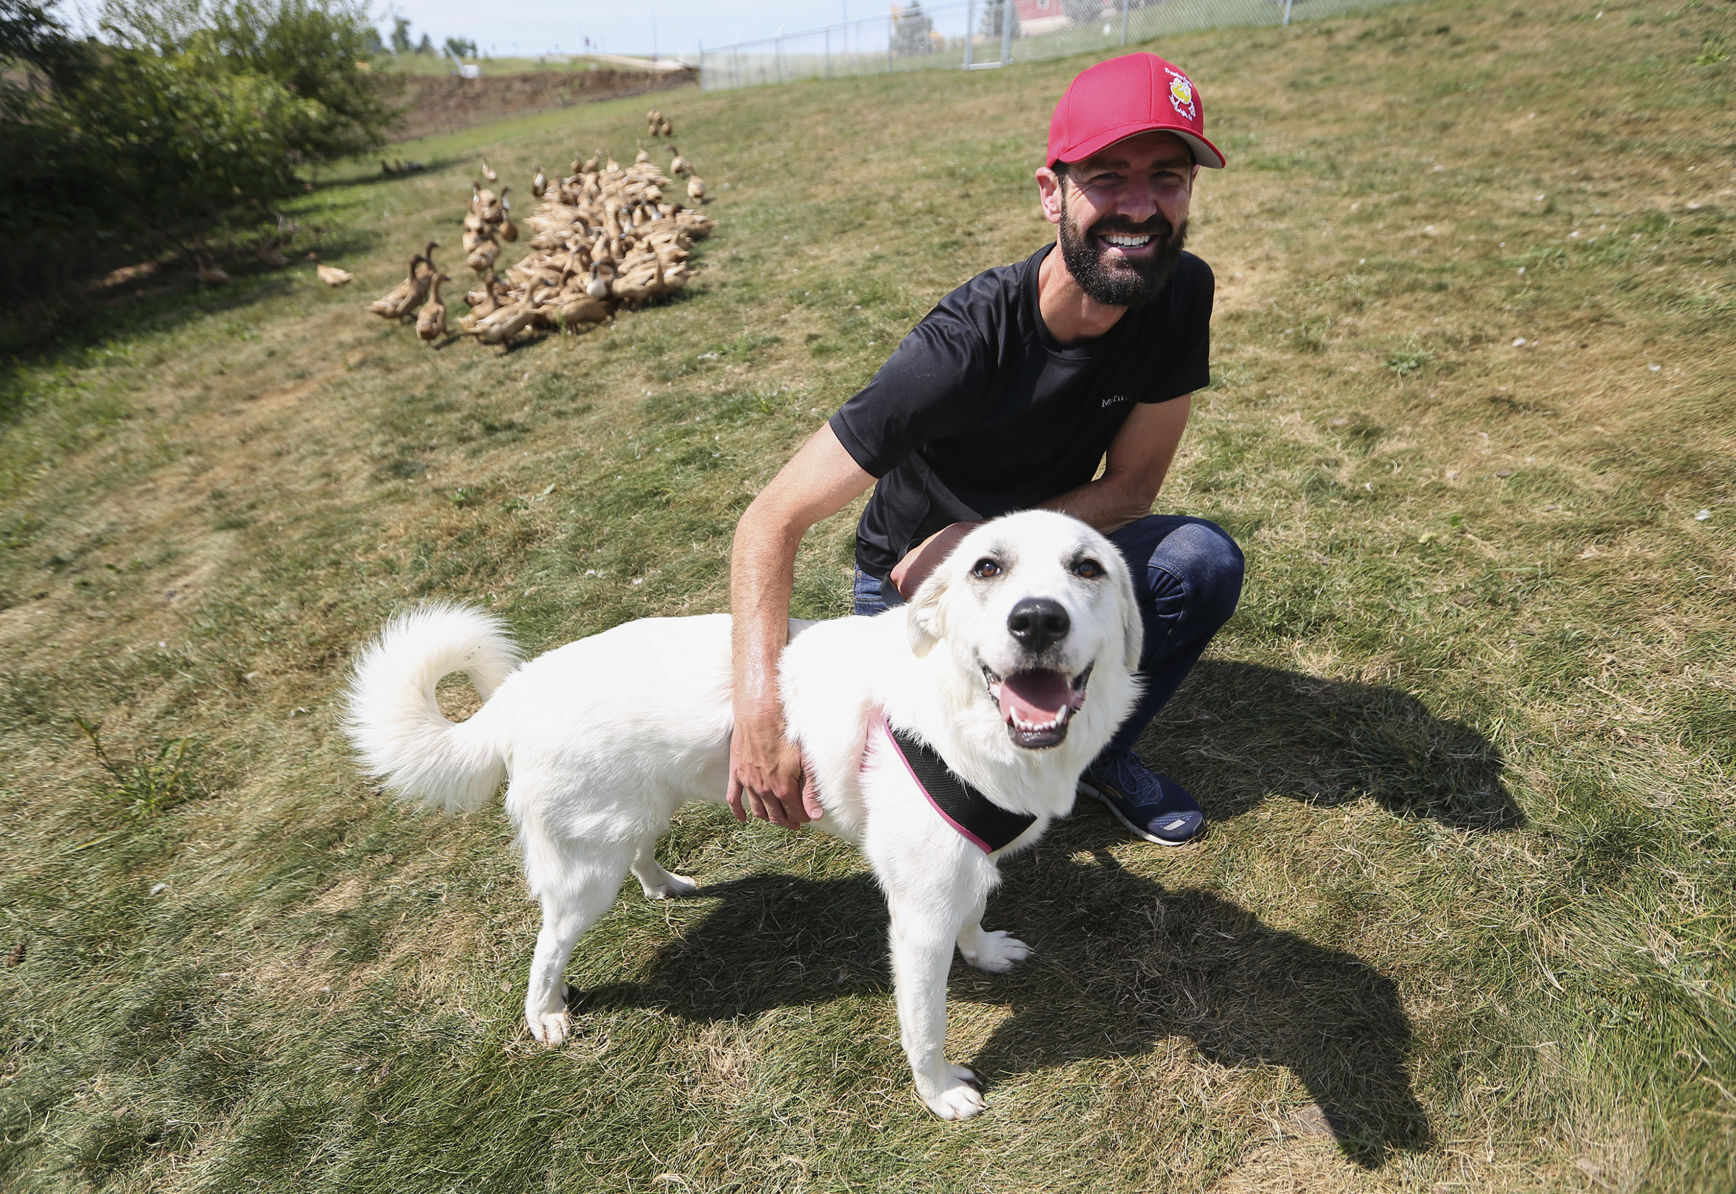 Owner Jeff Friedman with his dog, Dusty, at Treeline Farm in Zwingle, Iowa, on Friday, Aug. 28, 2020. PHOTO CREDIT: NICKI KOHL